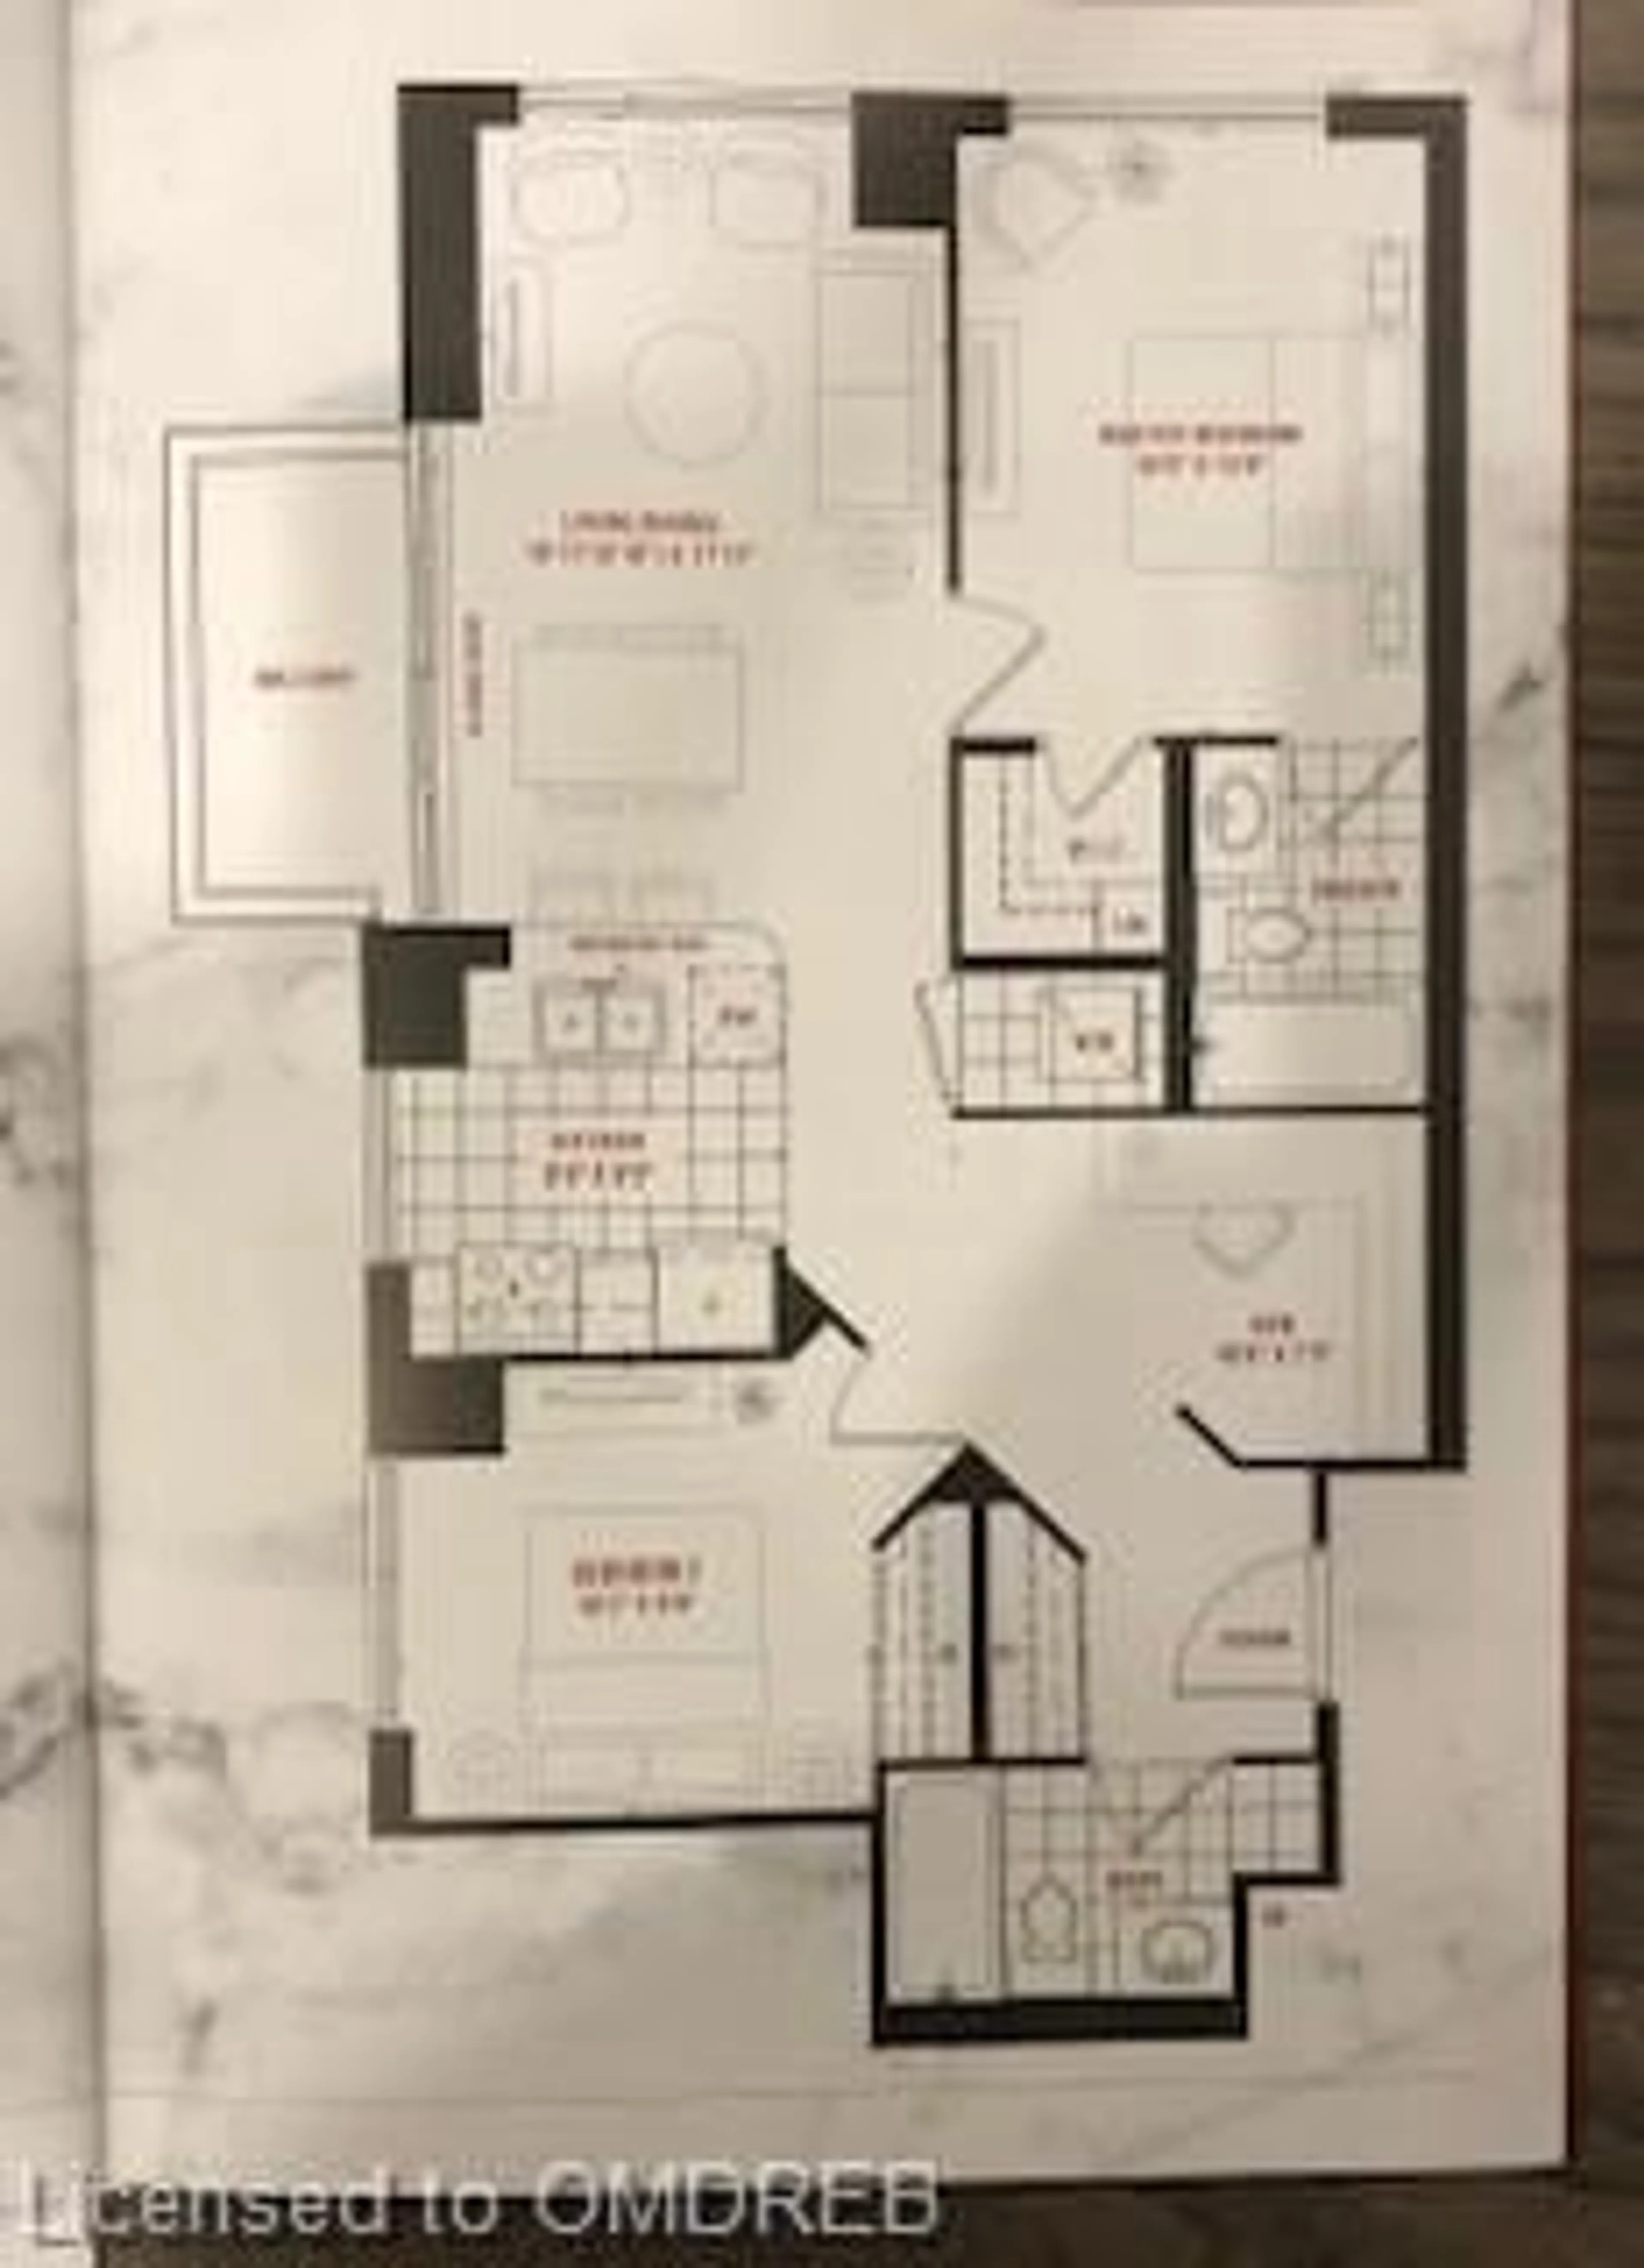 Floor plan for 349 Rathburn Rd W Rd #PH216, Mississauga Ontario L5B 0G9